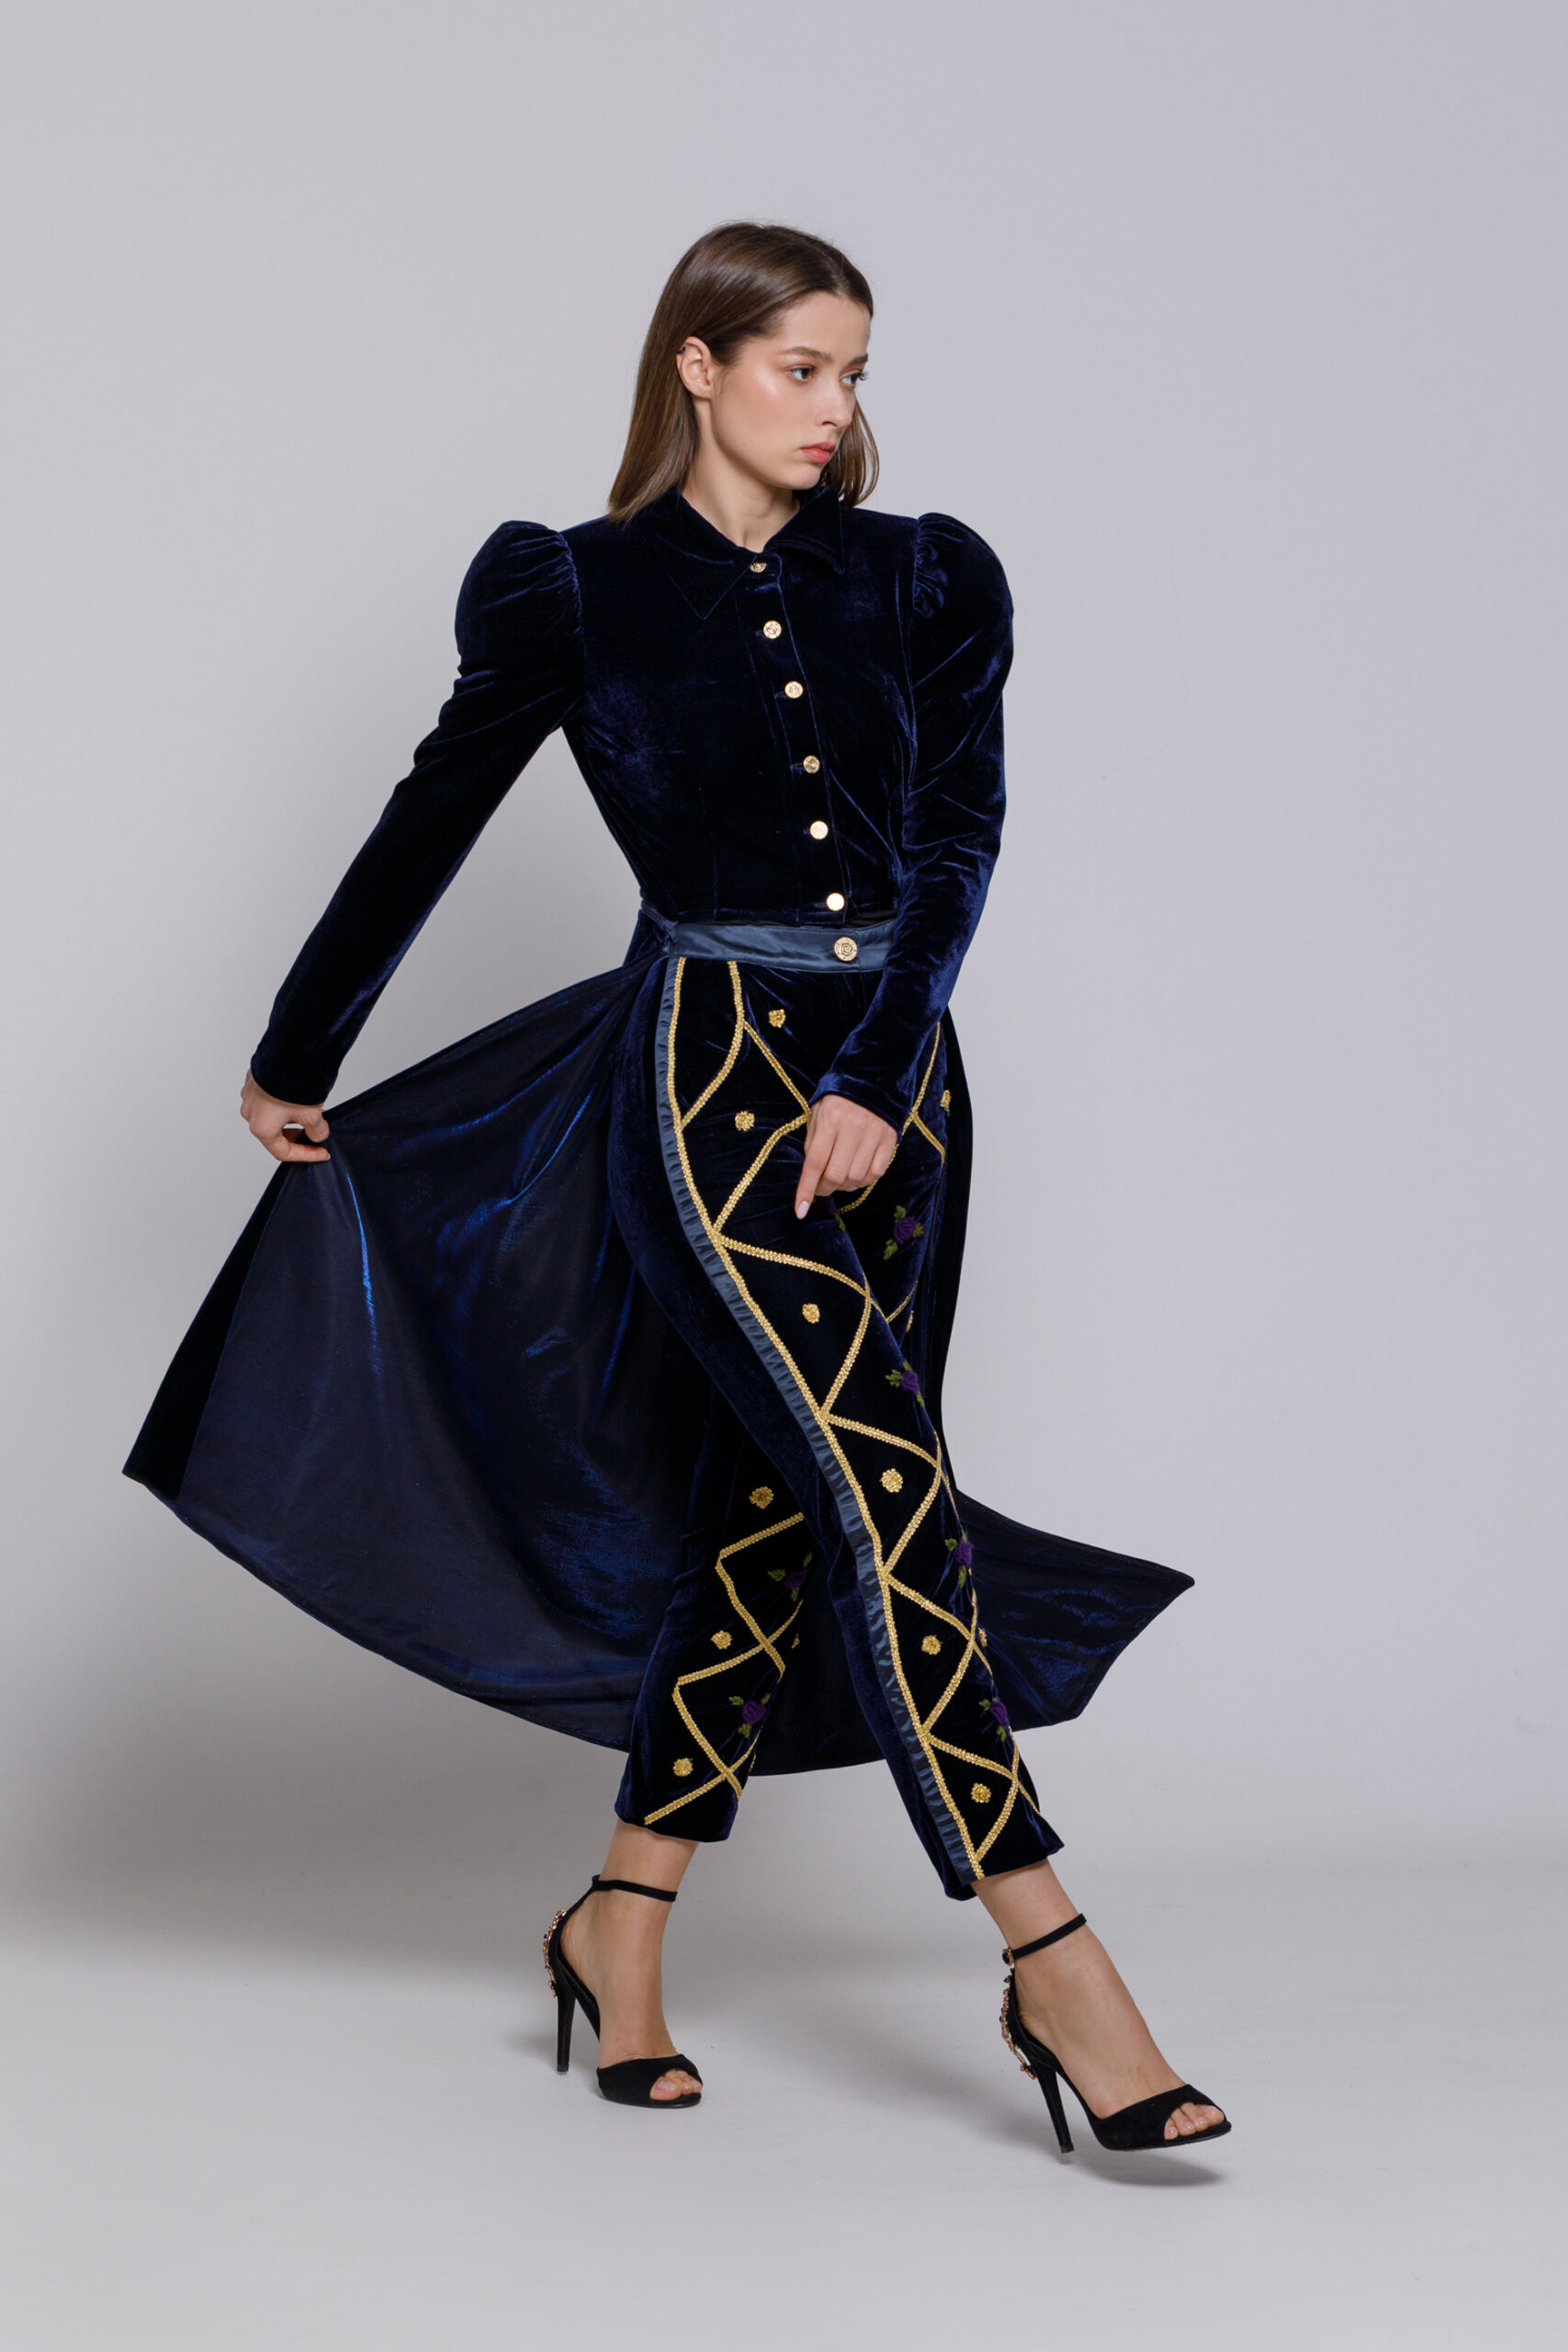 KENZADA navy blue velvet jacket with detachable train. Natural fabrics, original design, handmade embroidery